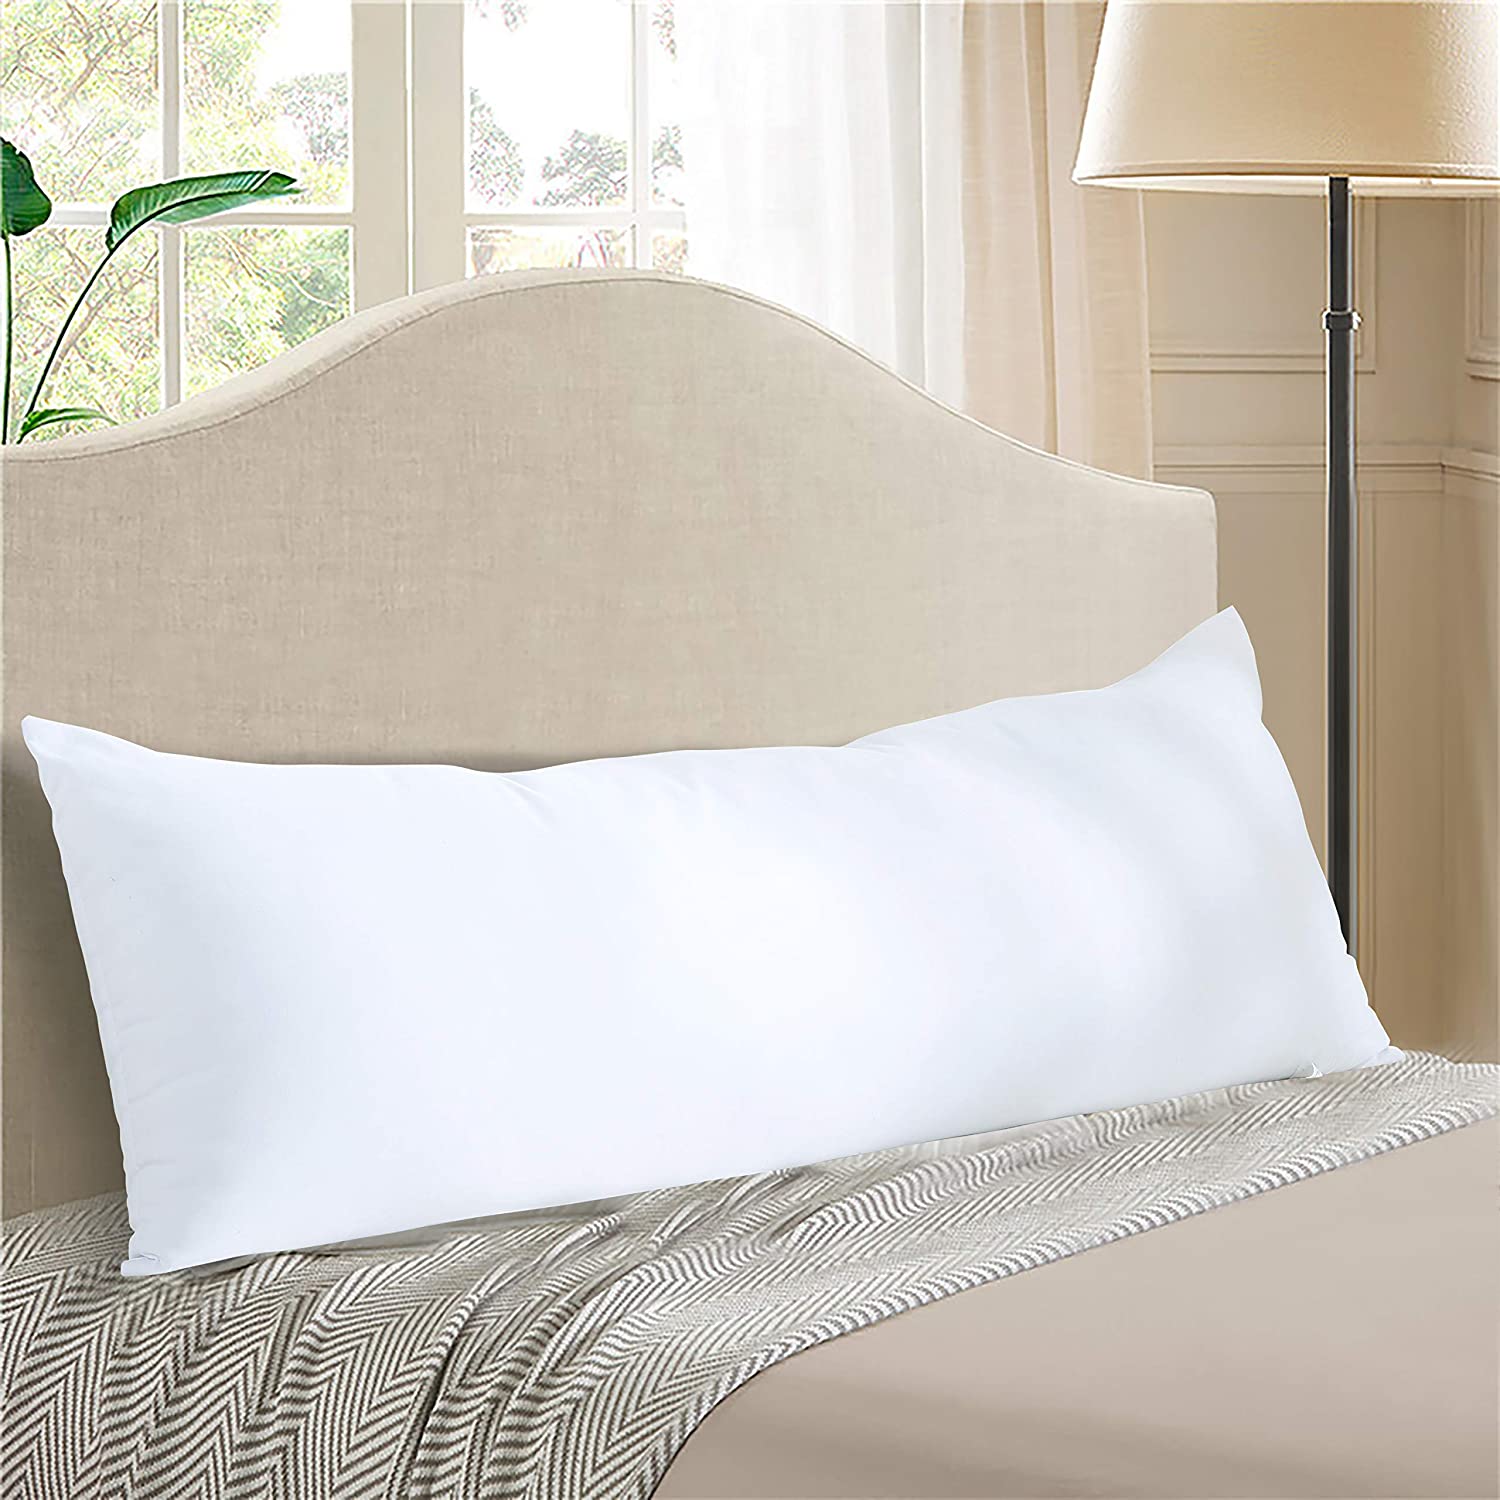 9. EVOLIVE Ultra-soft Microfiber Pillow Insert